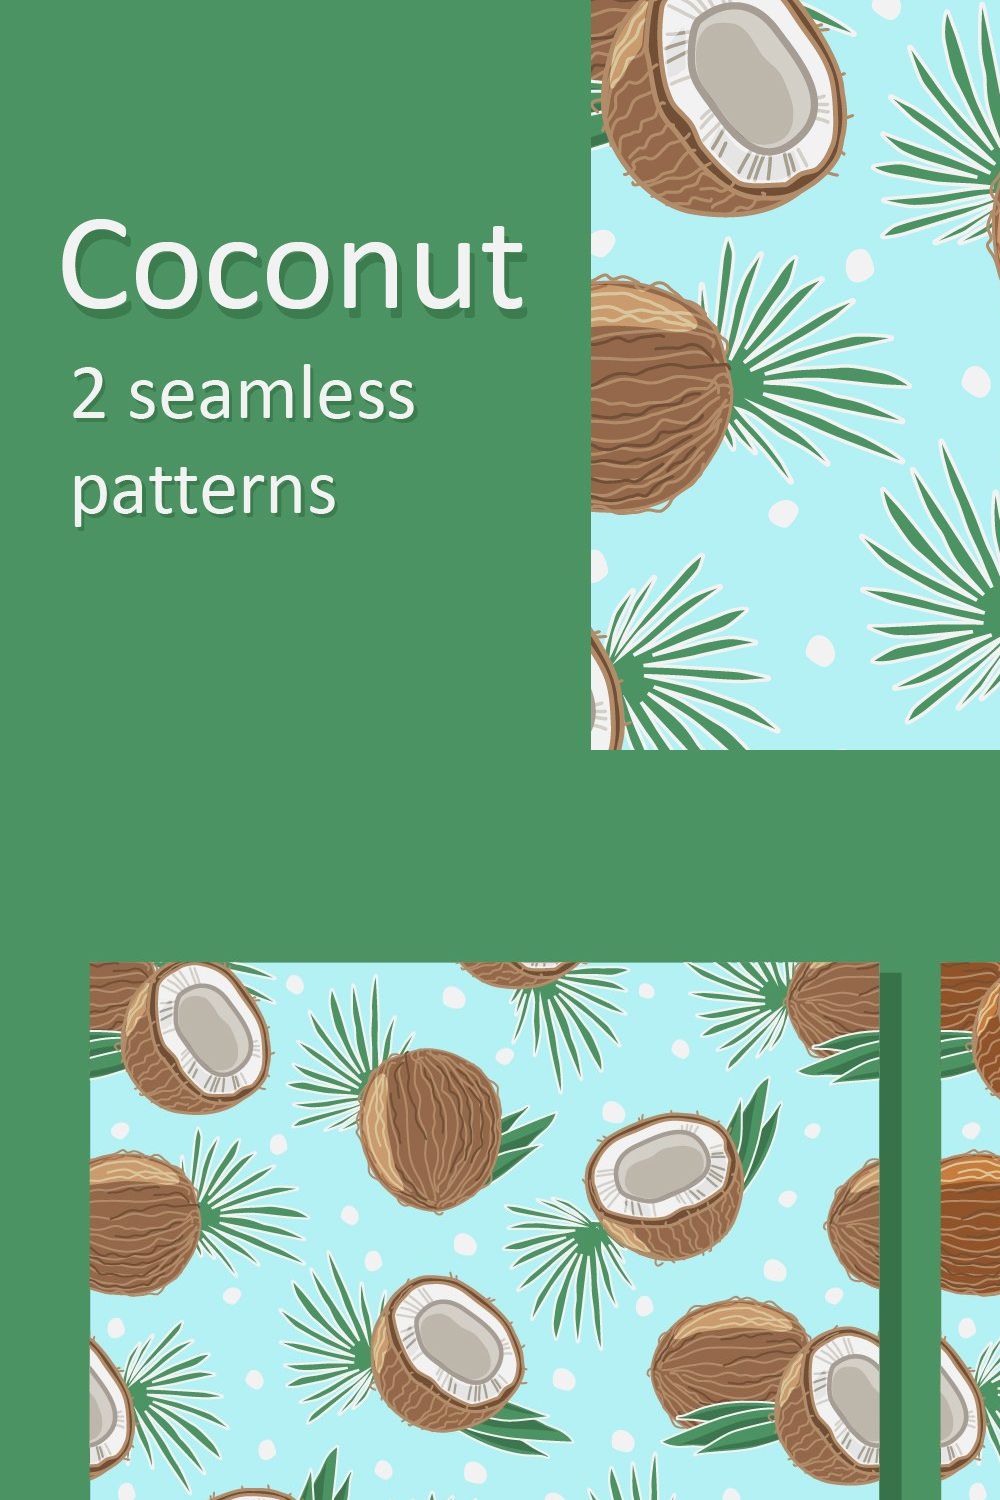 Coconut patterns pinterest preview image.